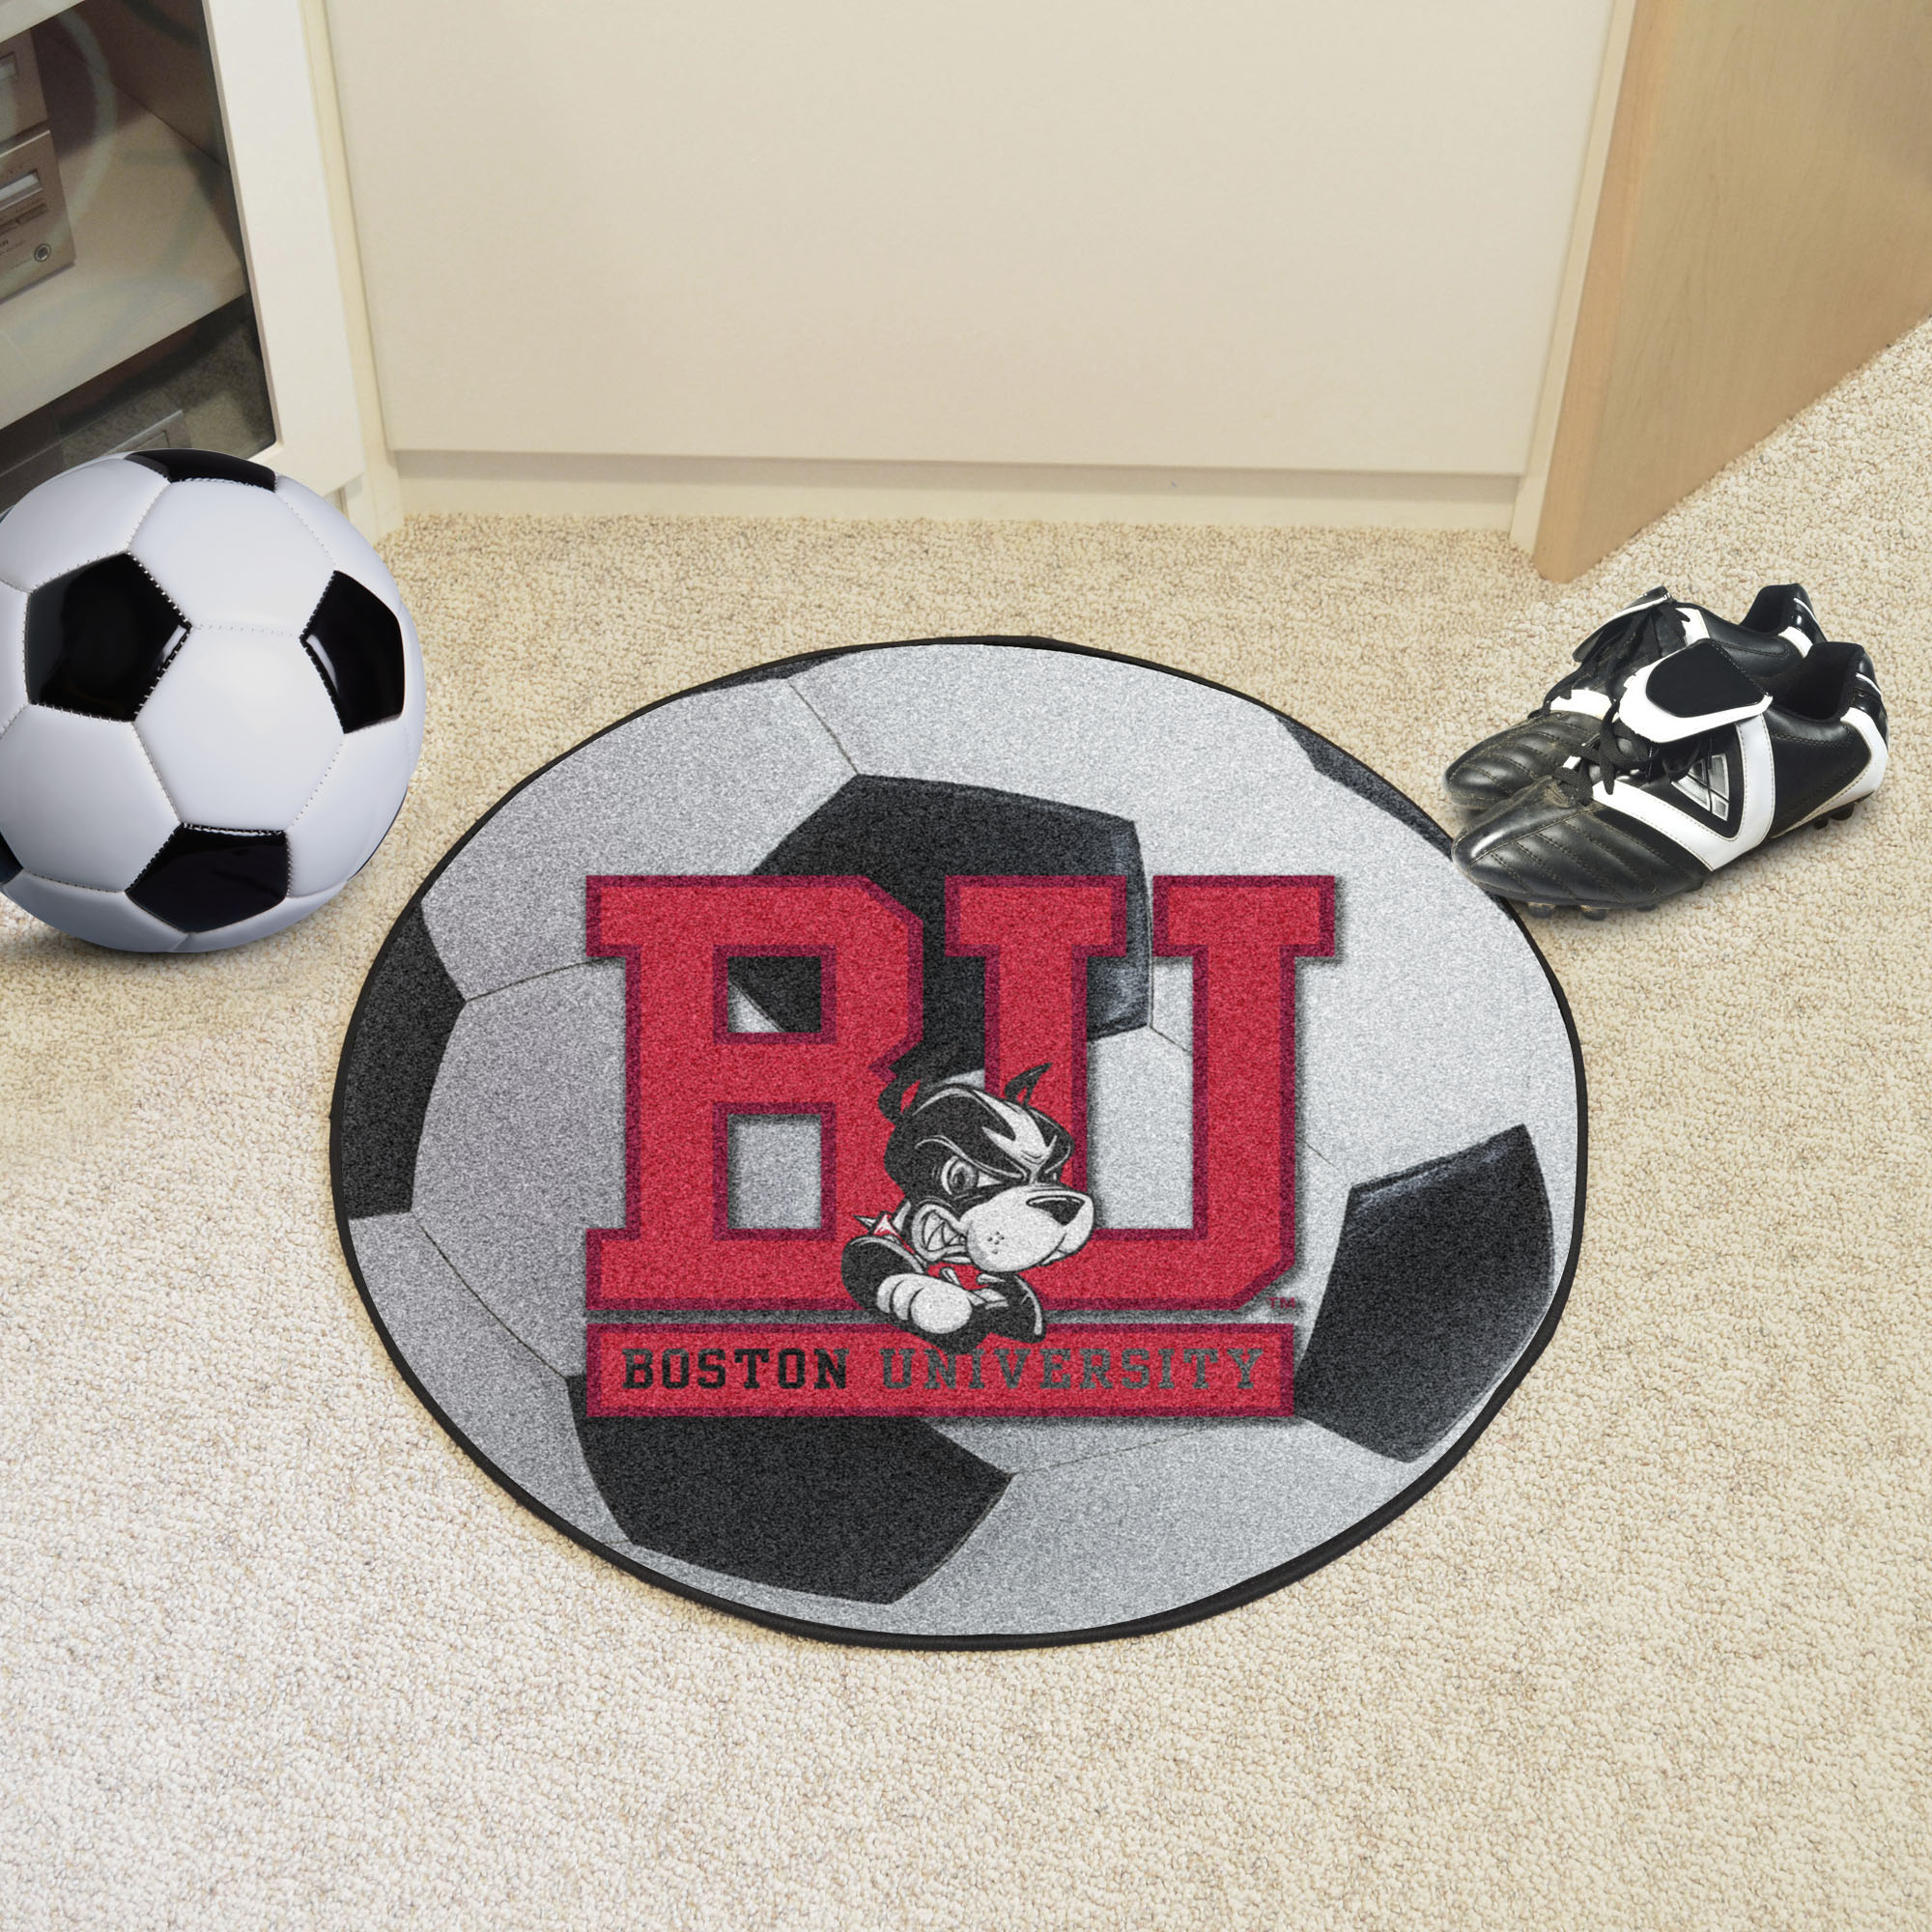 Boston University Ball-Shaped Area Rugs (Ball Shaped Area Rugs: Soccer Ball)